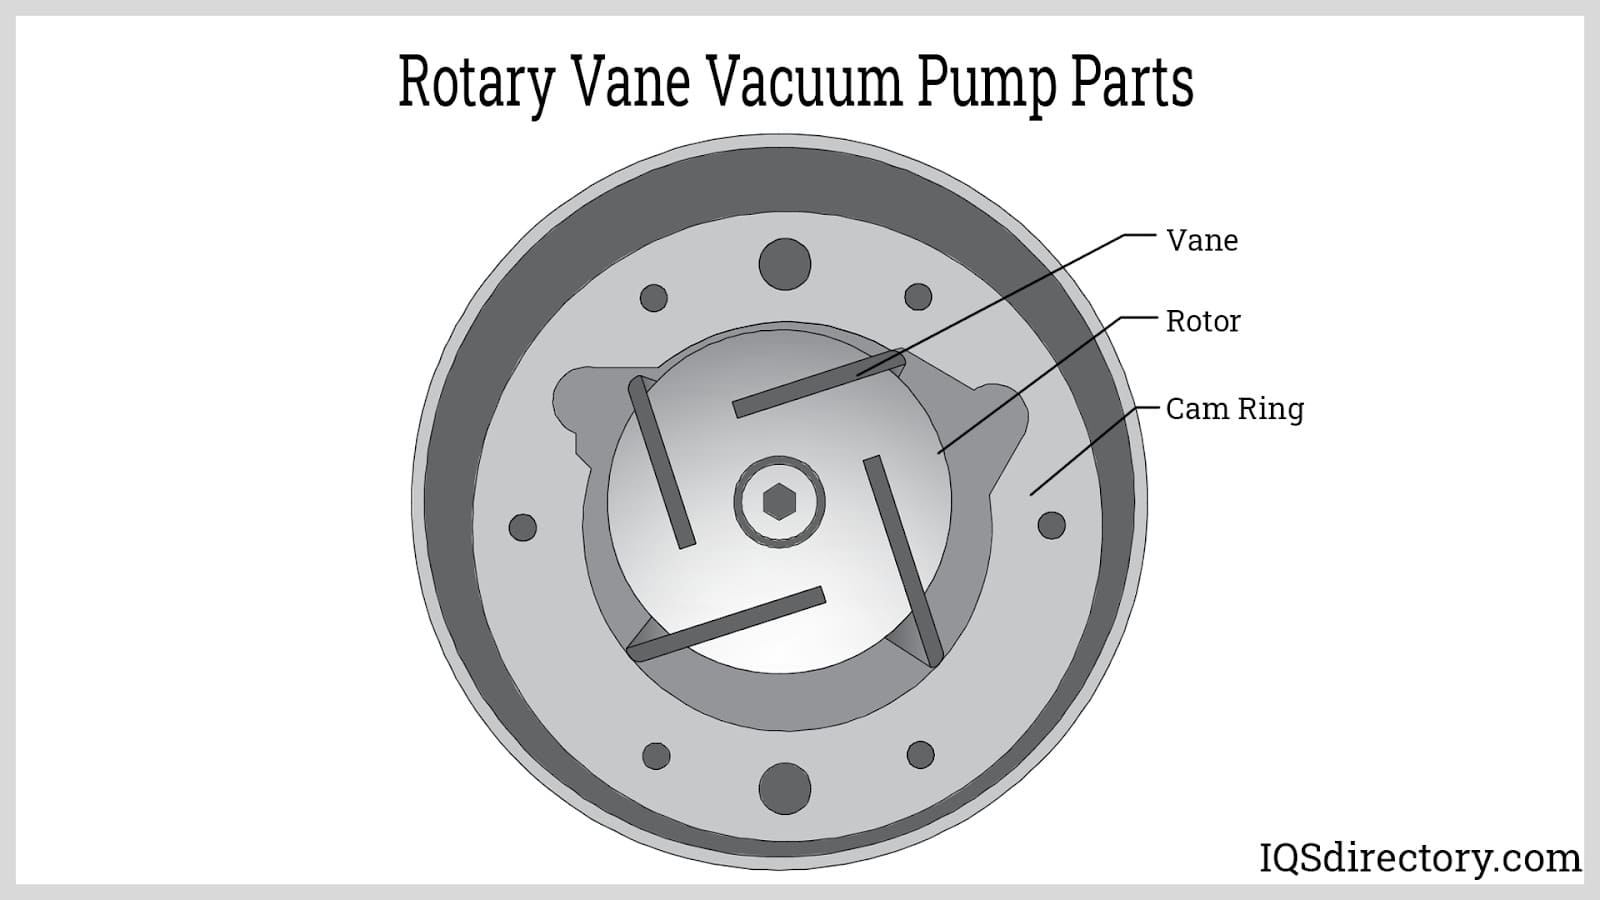 Rotary Vane Vacuum Pump Parts